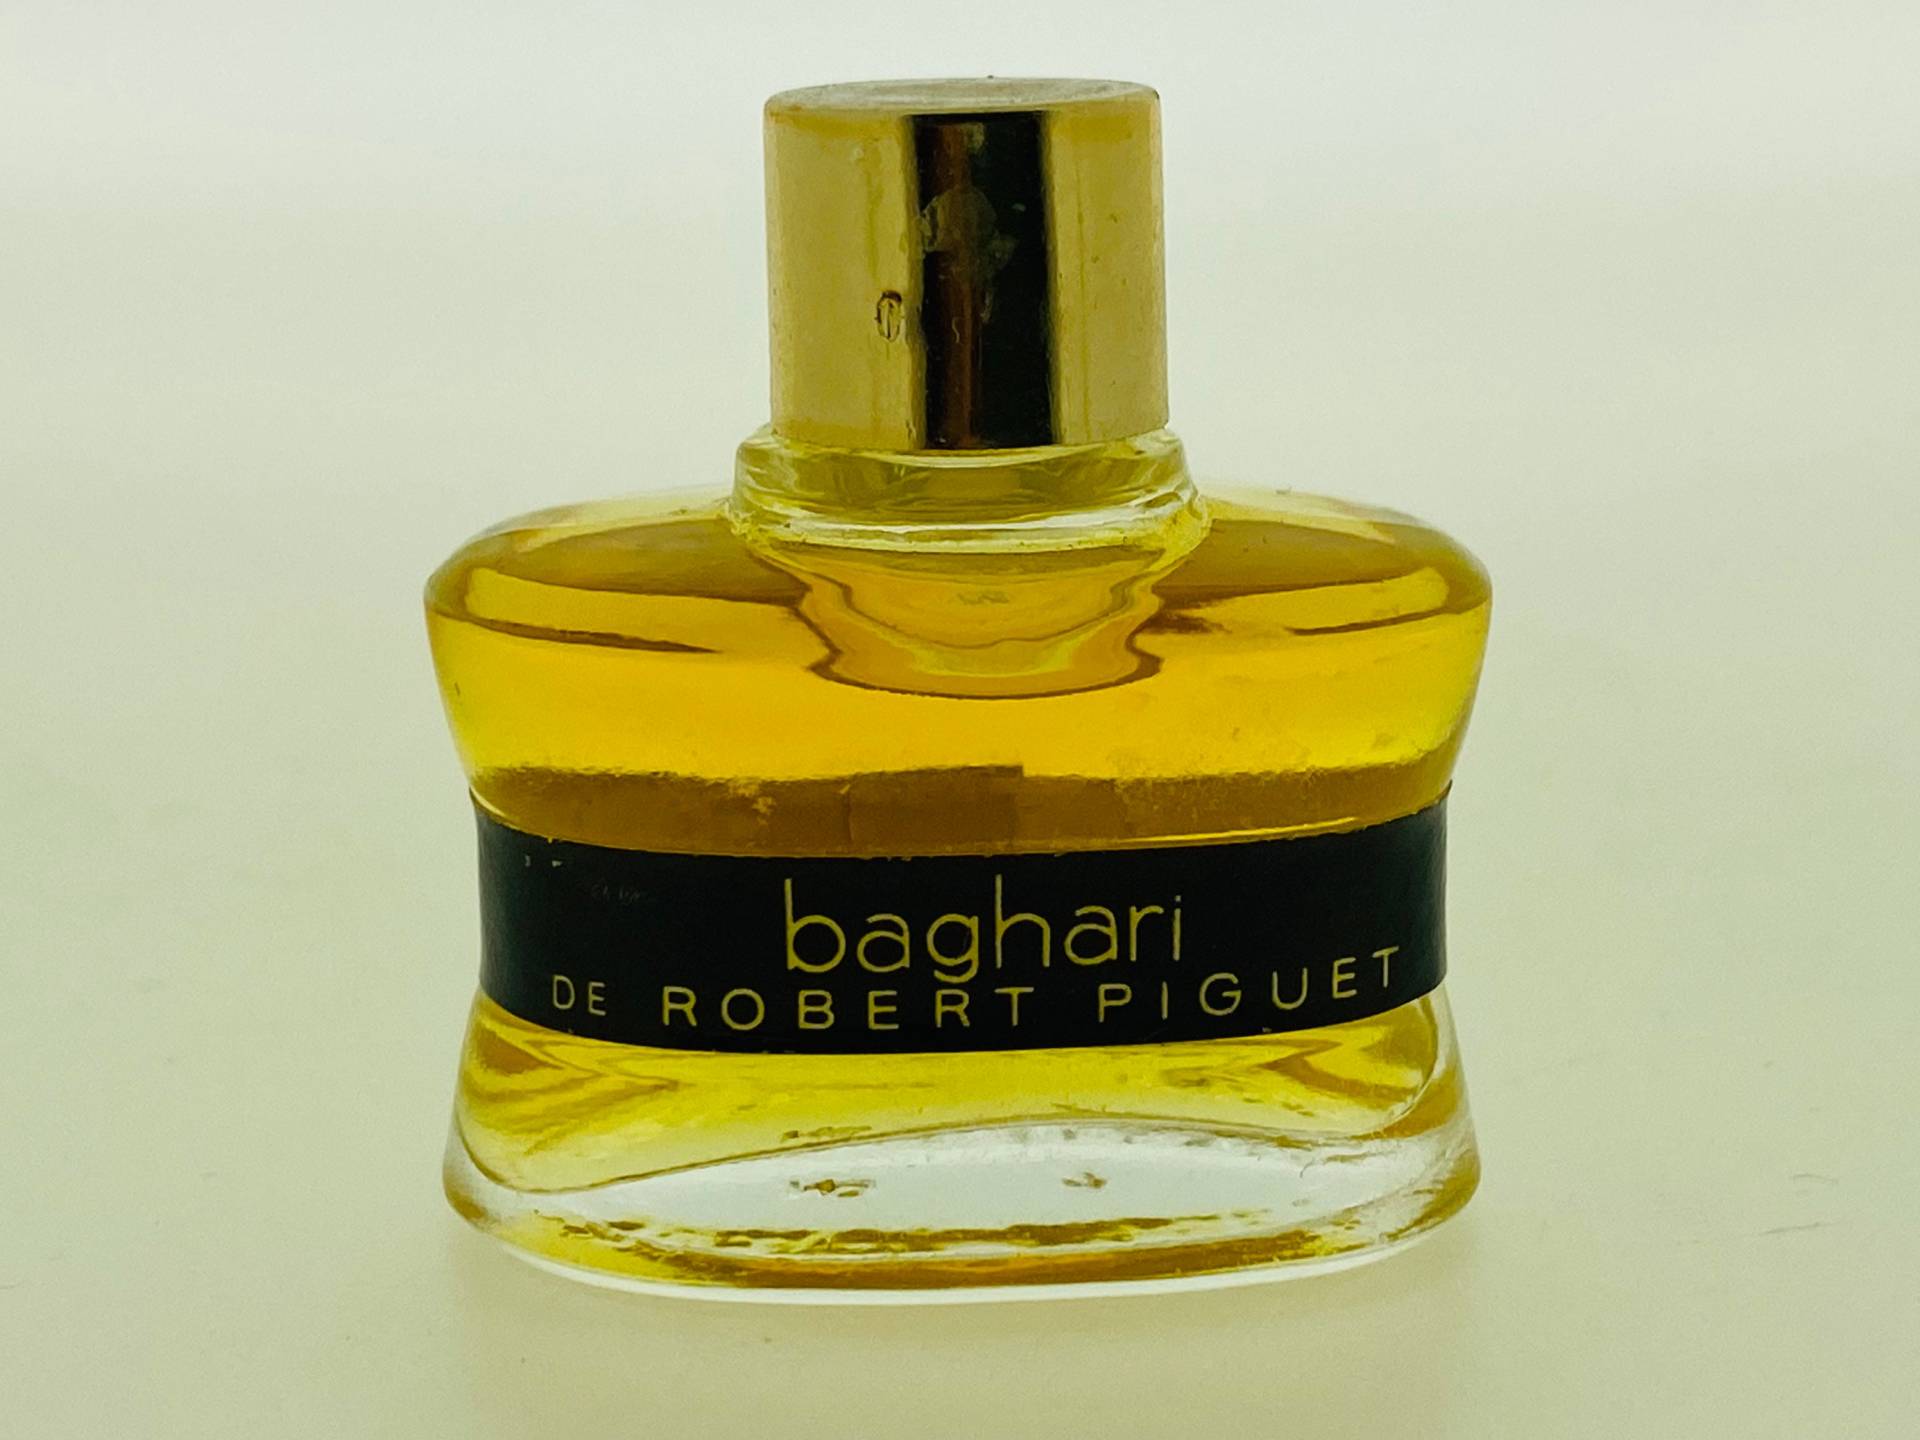 Baghari Robert Piguet 1950 Parfum Miniatur 4 Ml von VintagePerfumeShop